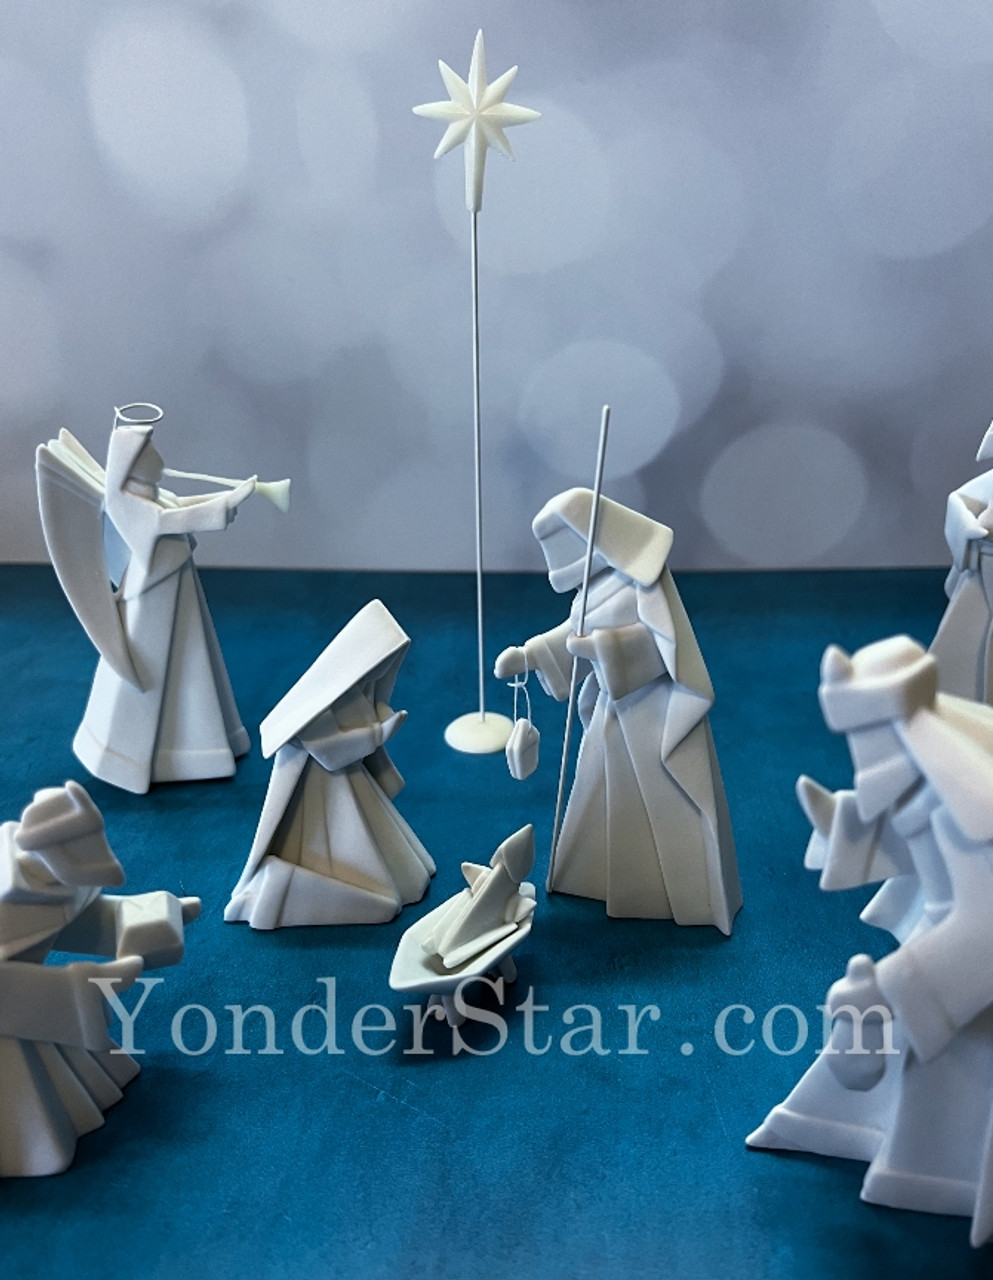 Porcelain Origami Nativity Scene - Yonder Star Christmas Shop LLC